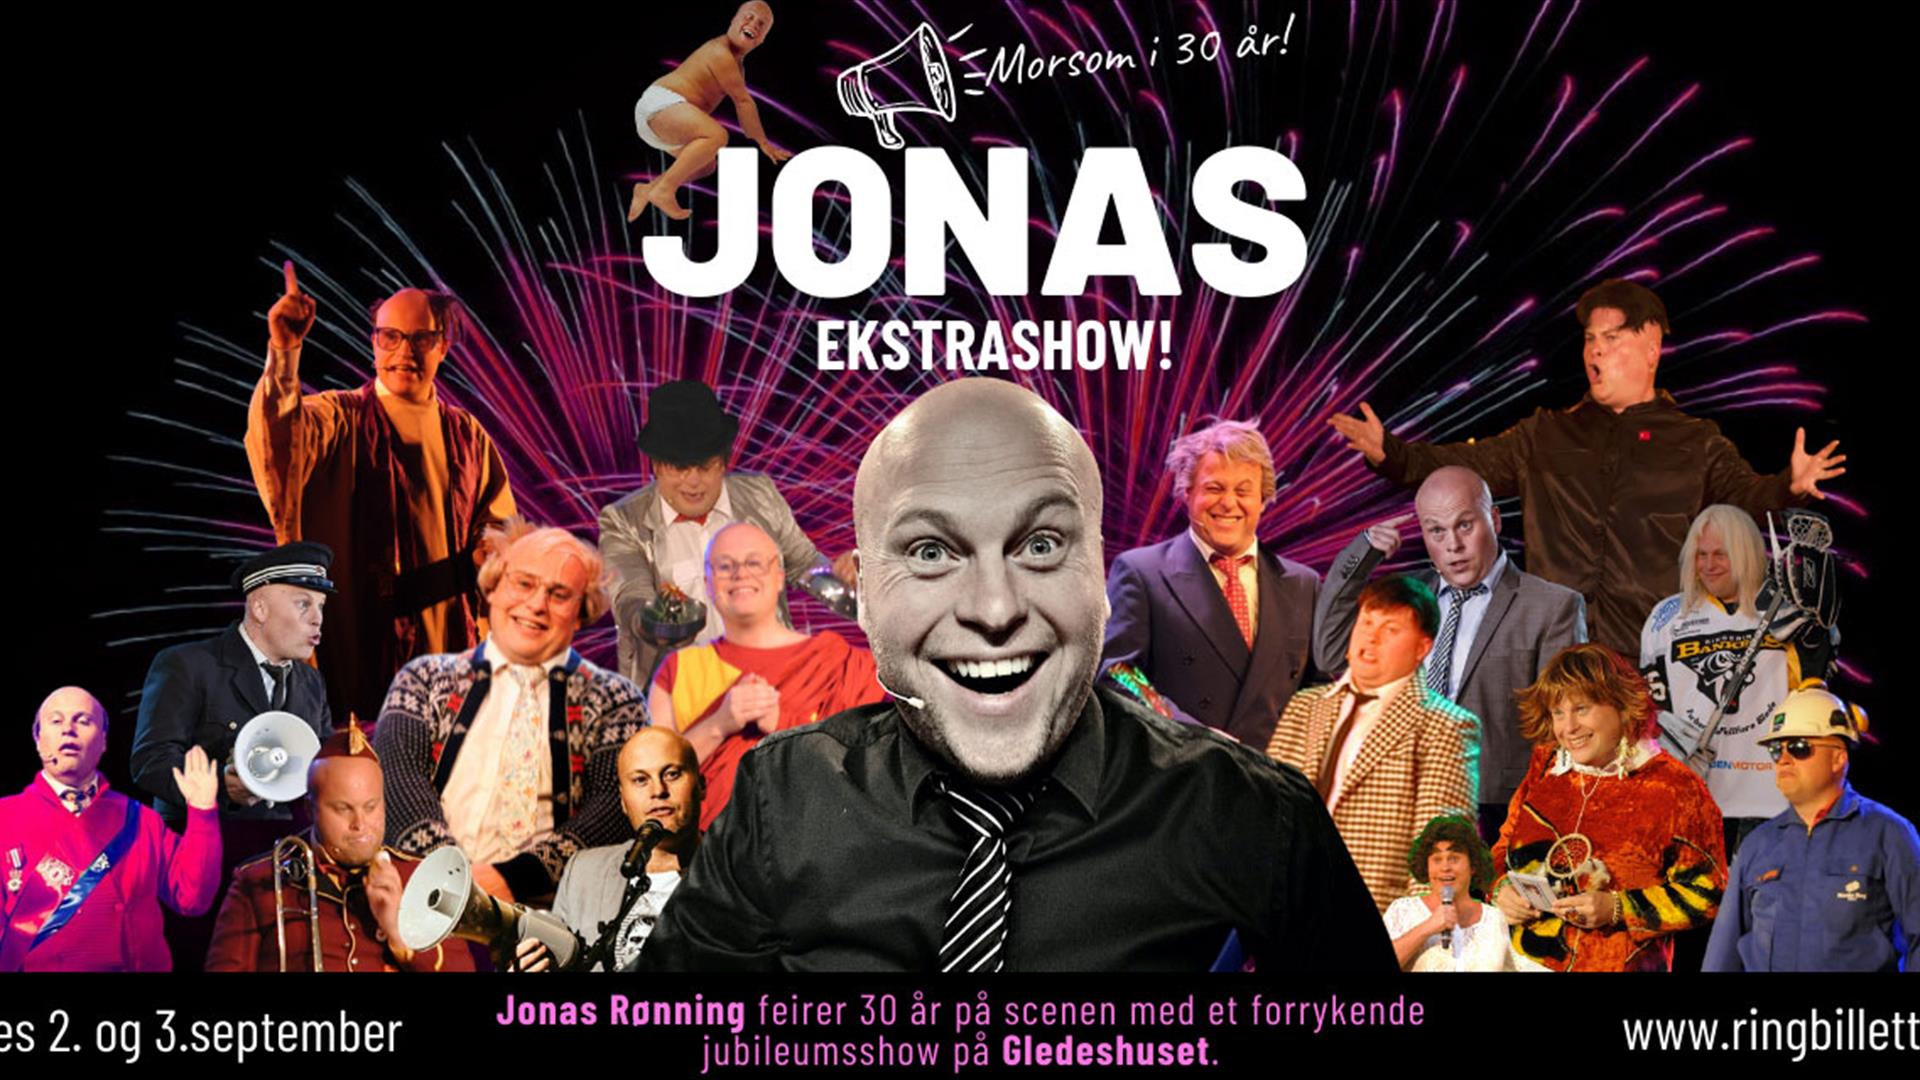 Jonas - Ekstrashow!